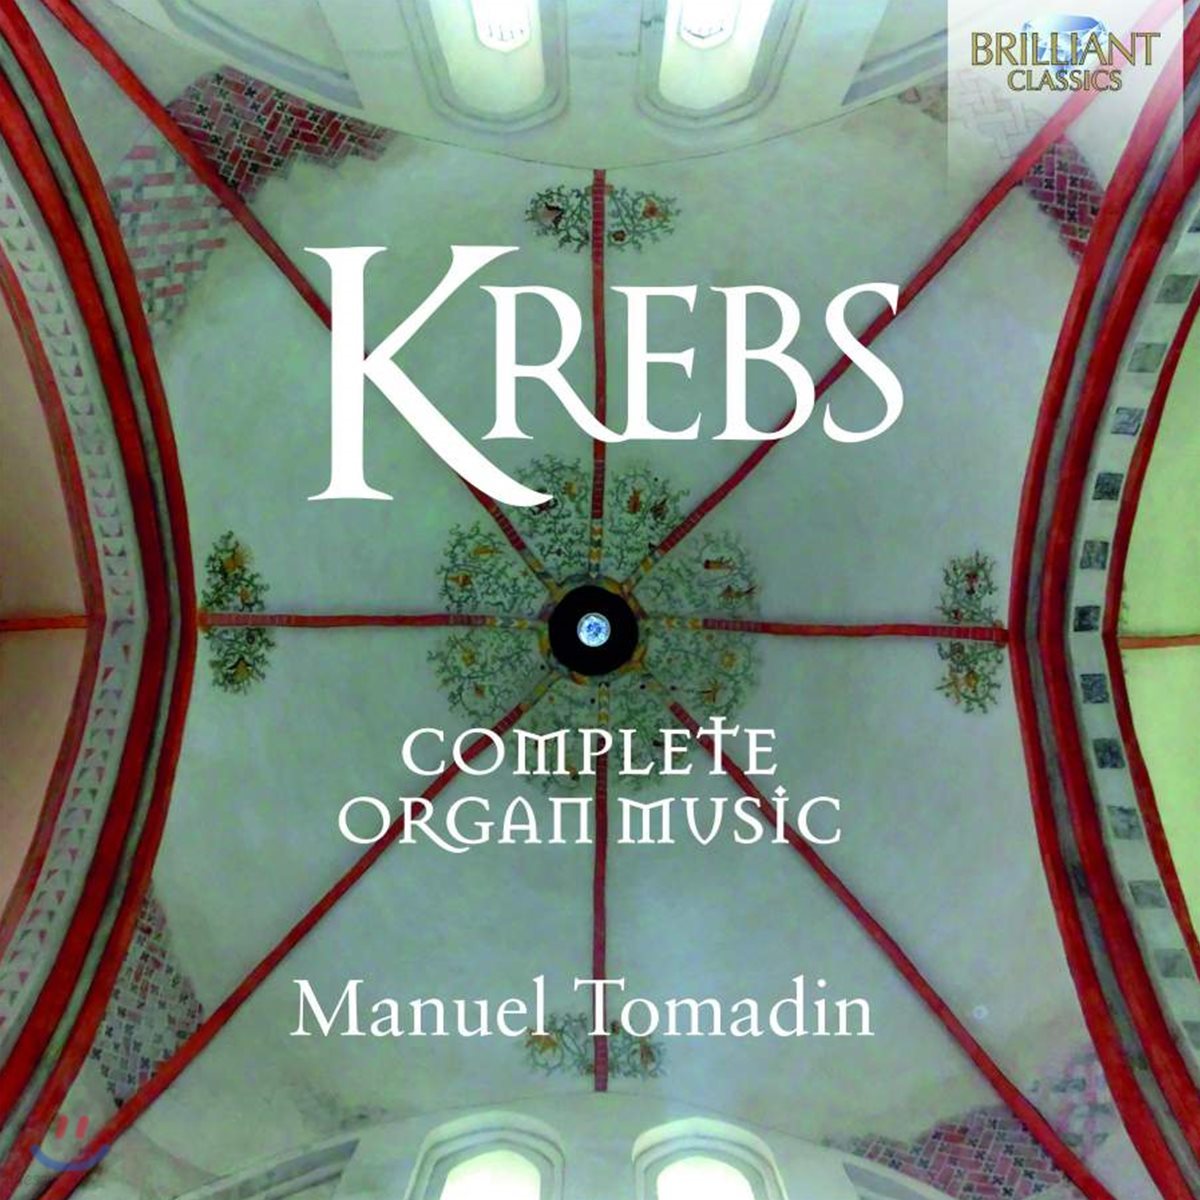 Manuel Tomadin 요한 루드비히 크렙스: 오르간 작품 전곡집 [독주집] (Johann Ludwig Krebs: Complete Organ Music)